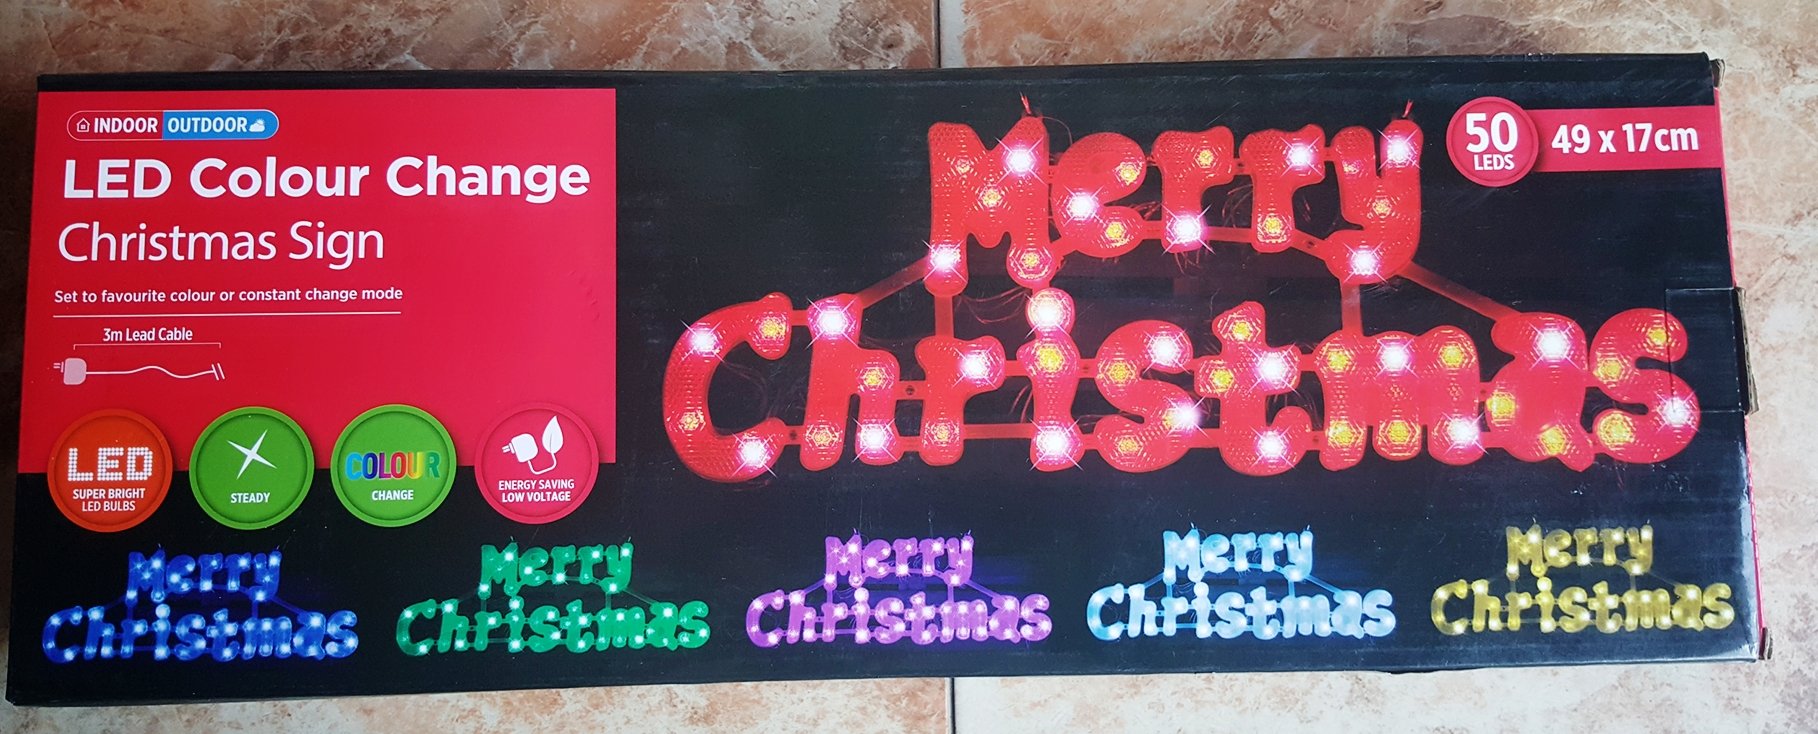 Led Colour Change Christmas Sign